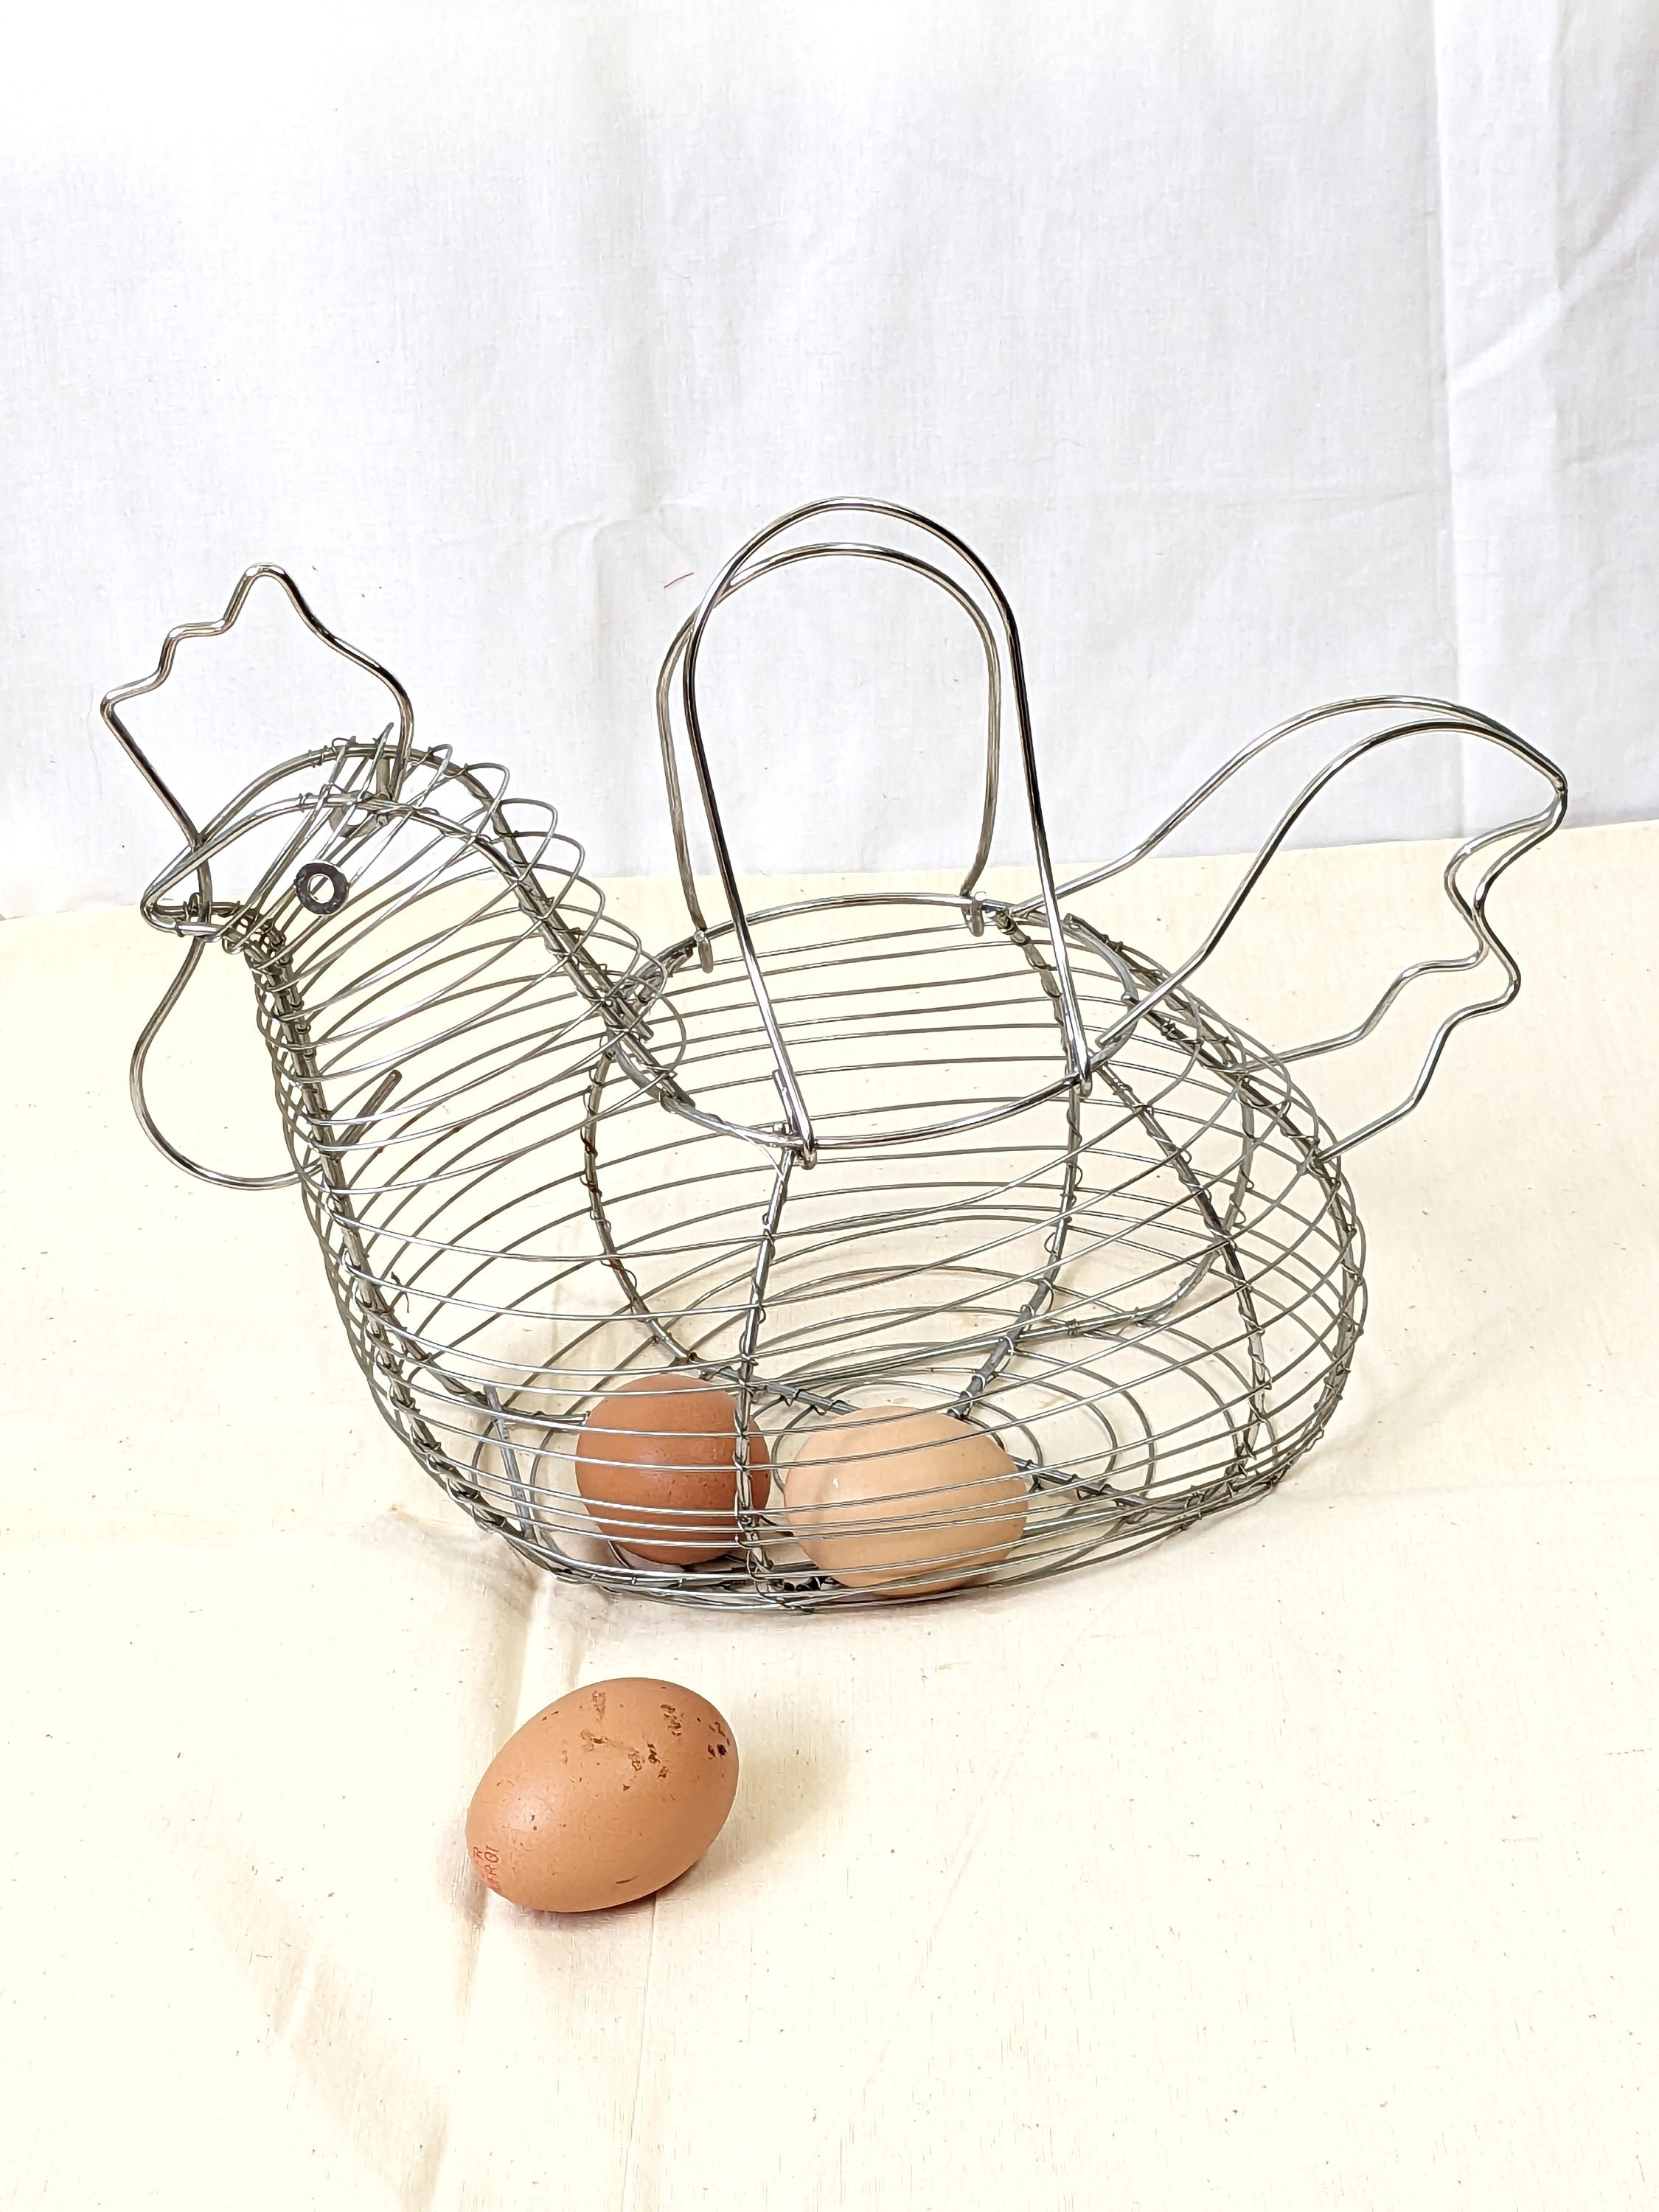 QIIBURR Egg Basket for Gathering Fresh Eggs Colorful Design Eggs Basket  Ceramic Chicken-Shaped Lid, Round Wire Basket Bottom and Handle Egg Baskets